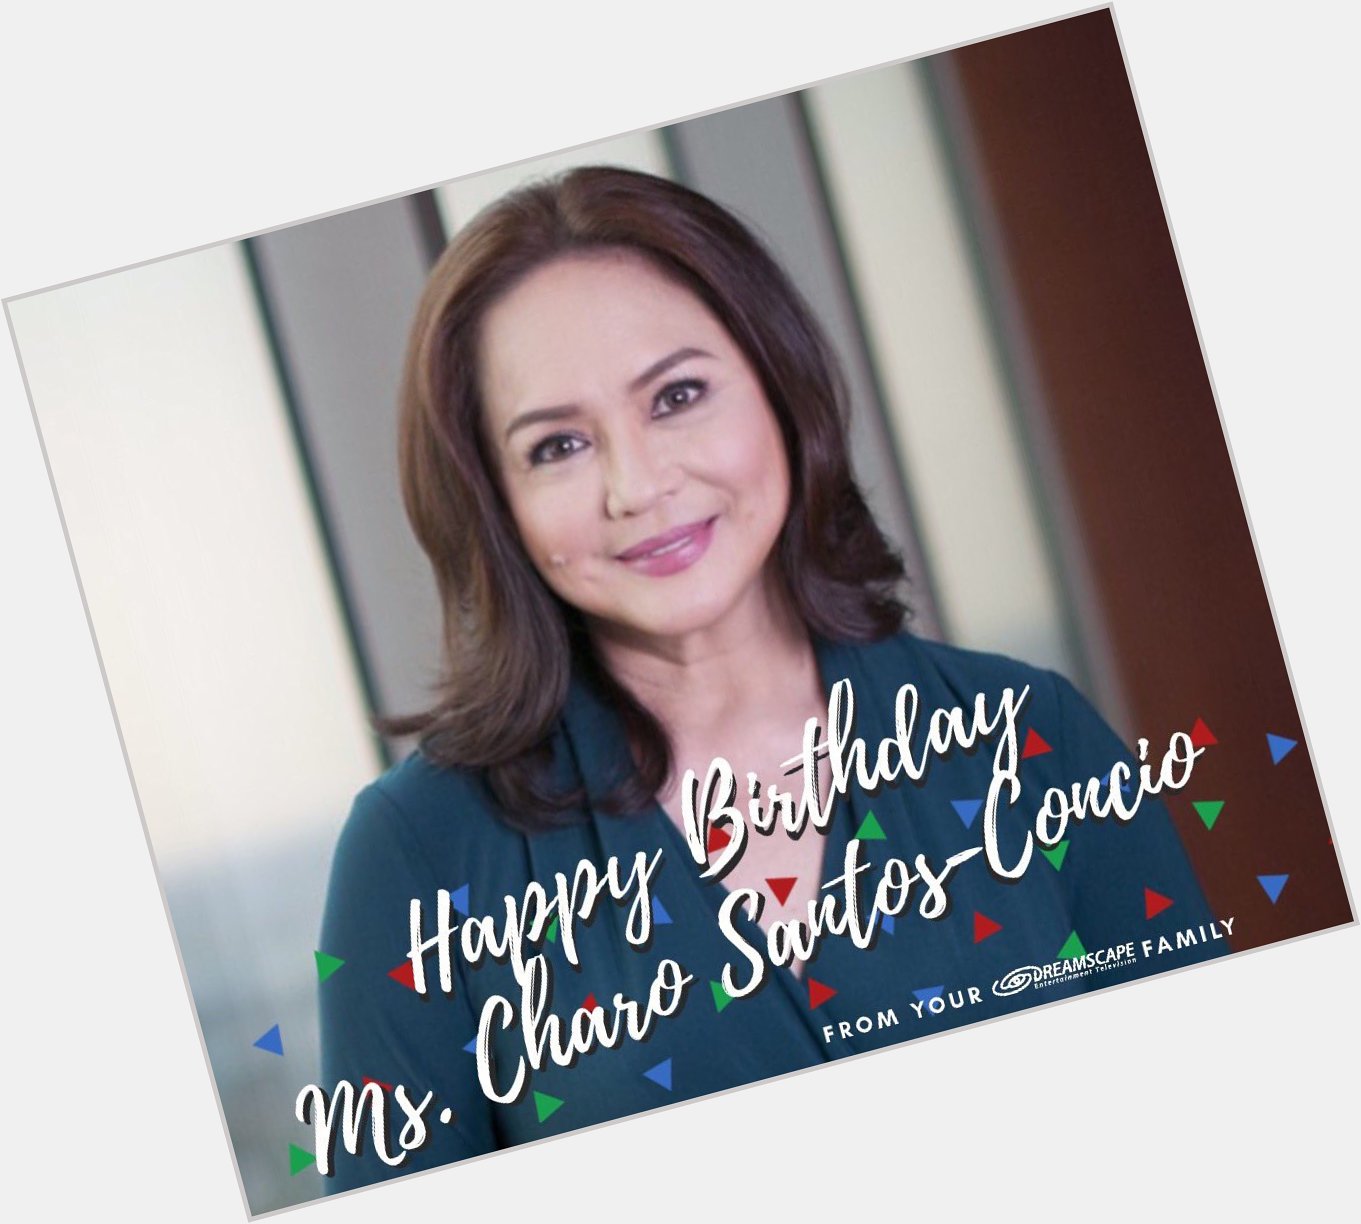 Happy birthday Ms. Charo Santos-Concio from your Dreamscape family 